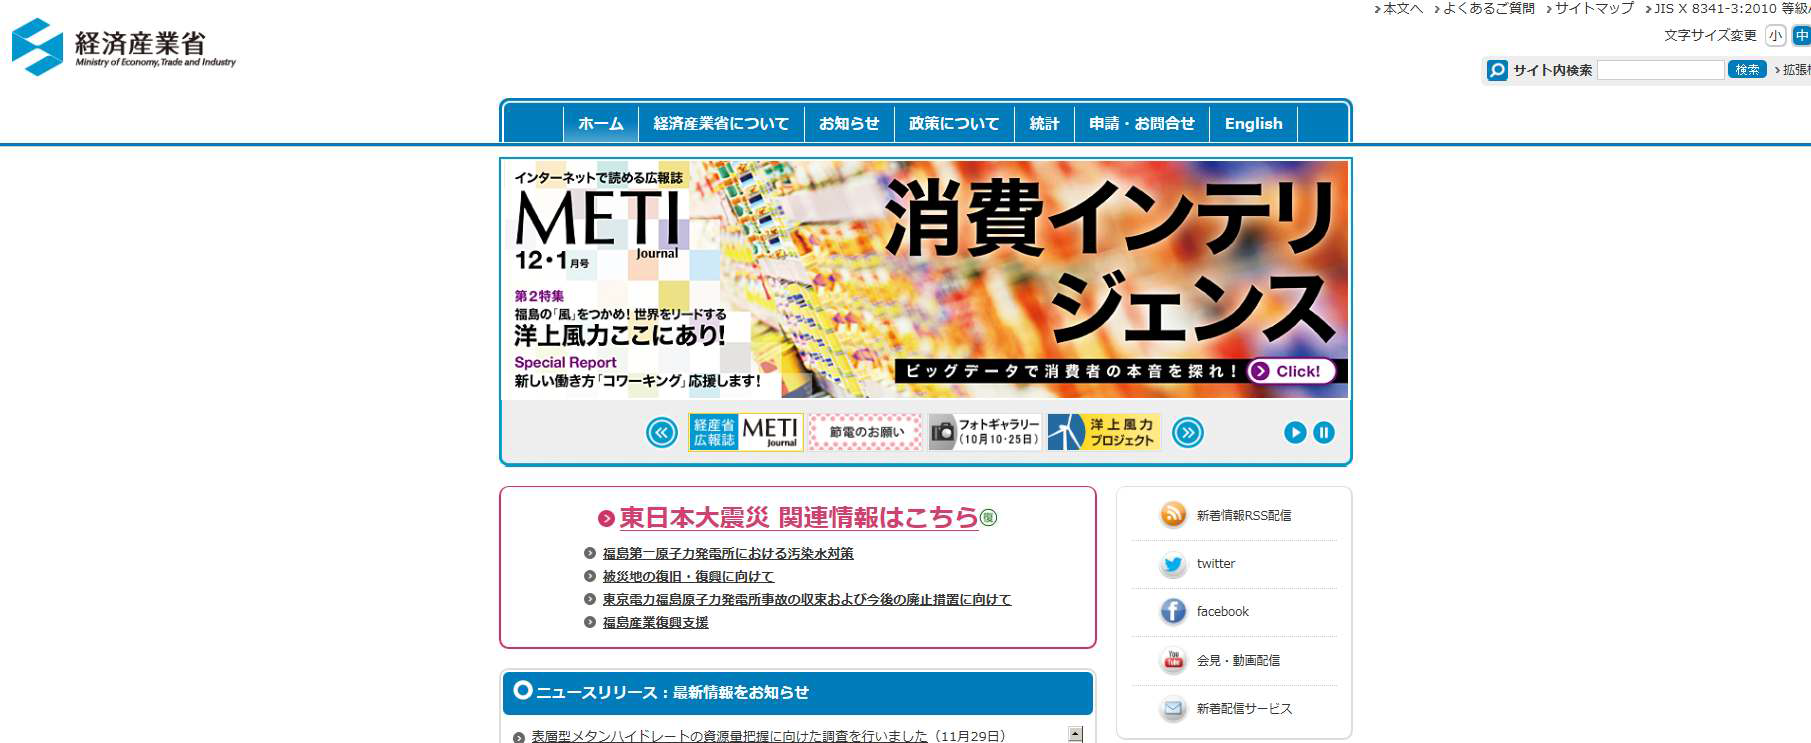 Homepage of MIC